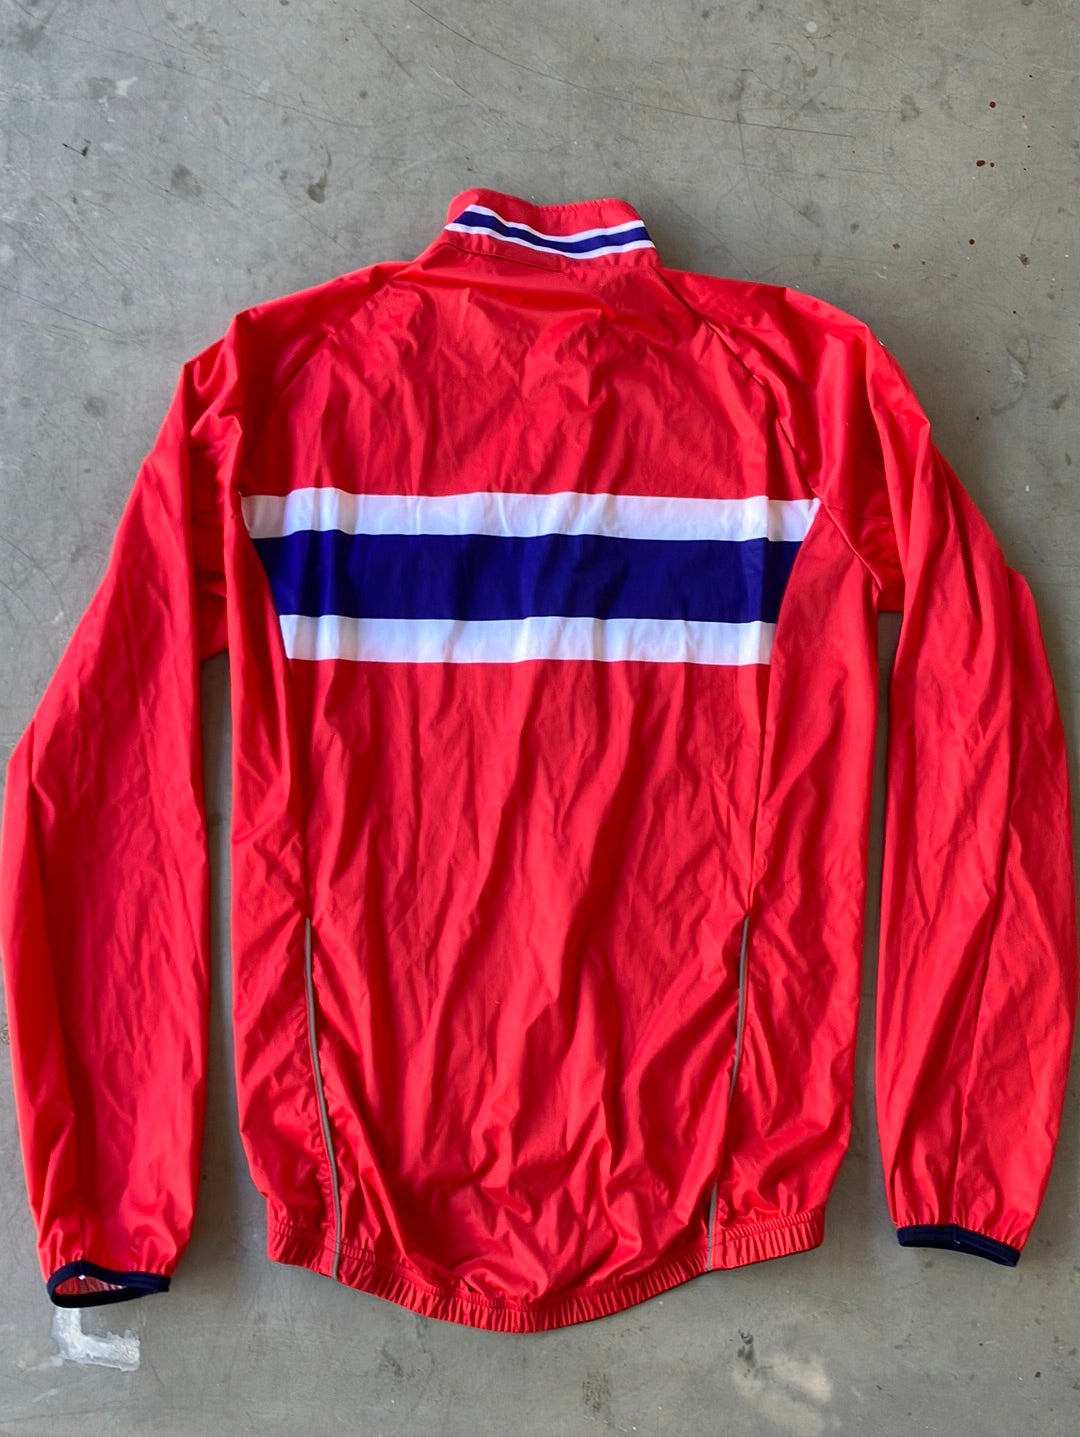 Rain Jacket / Rain Cape | Diadora | Norway National Team | Pro Cycling Kit